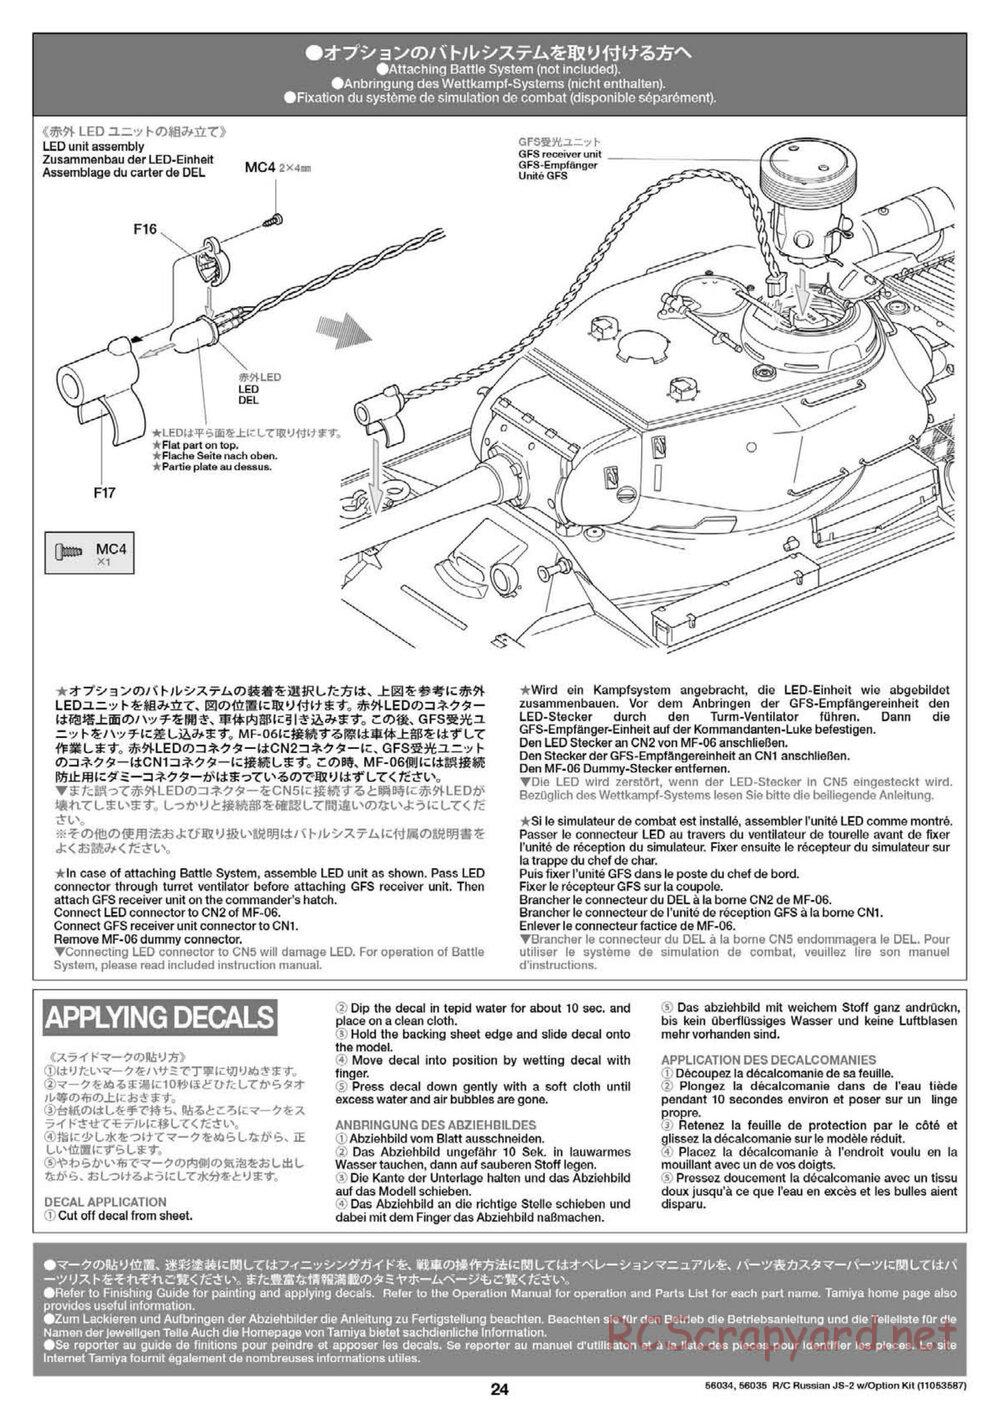 Tamiya - Russian Heavy Tank JS-2 1944 ChKZ - 1/16 Scale Chassis - Manual - Page 24